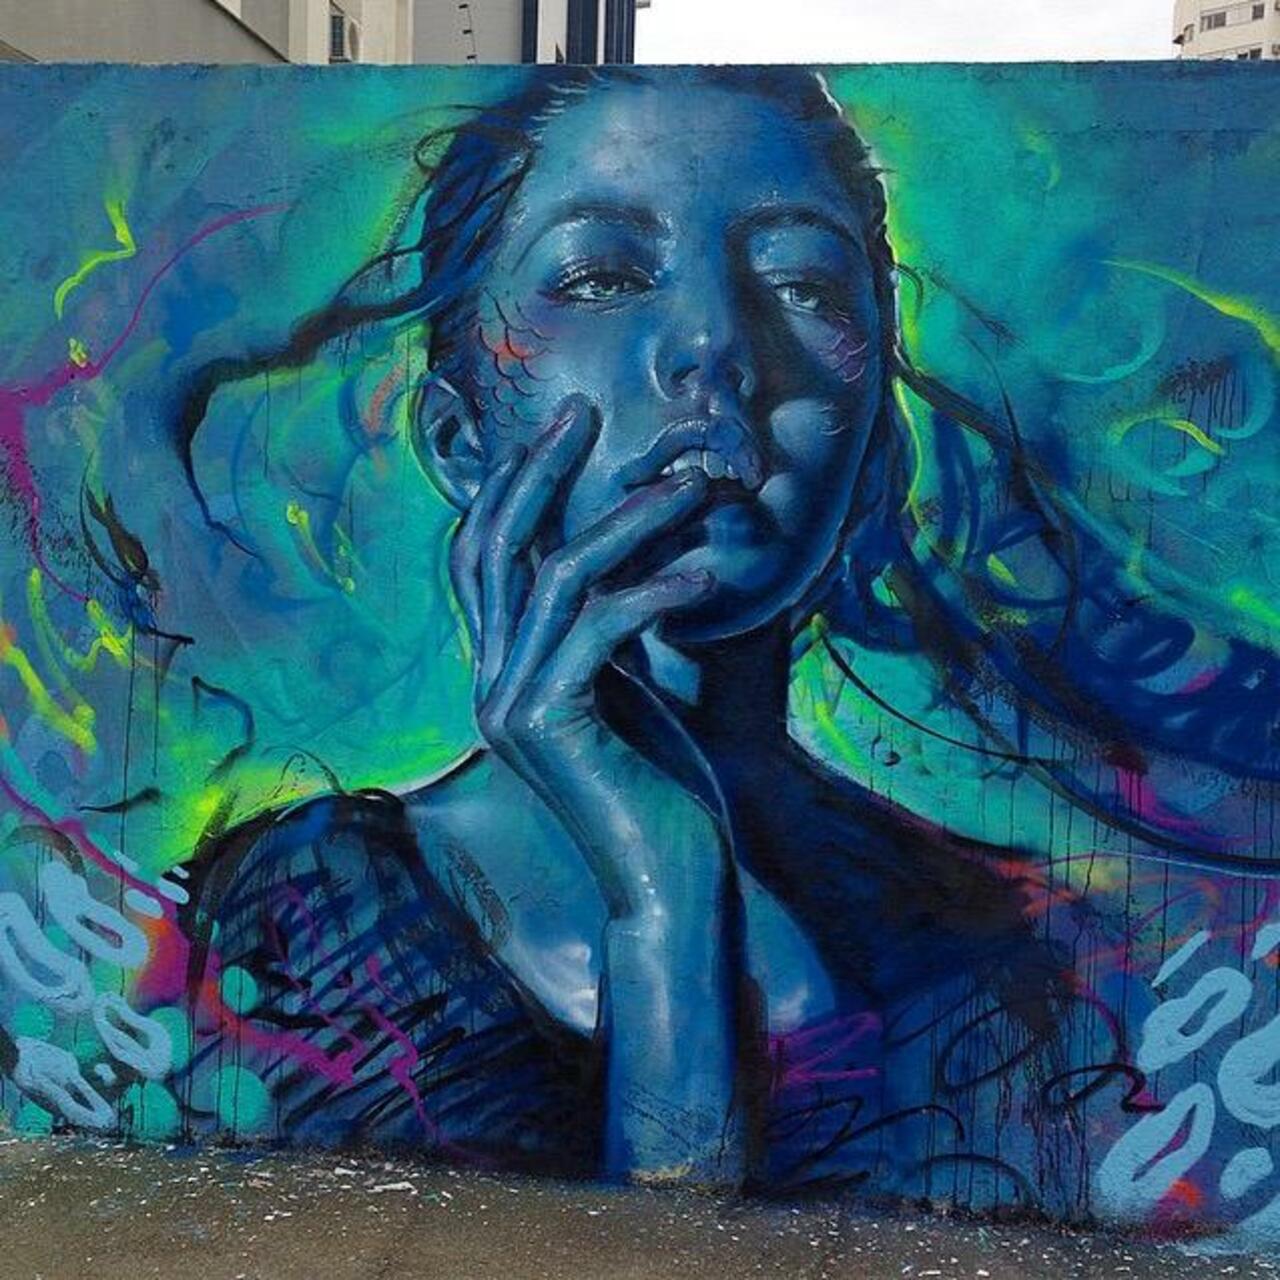 Thiago Valdi new Street Art piece titled 'Day Dreamer' #art #mural #graffiti #streetart http://t.co/3UodbQm48I …… http://twitter.com/charlesjackso14/status/652728478597545984